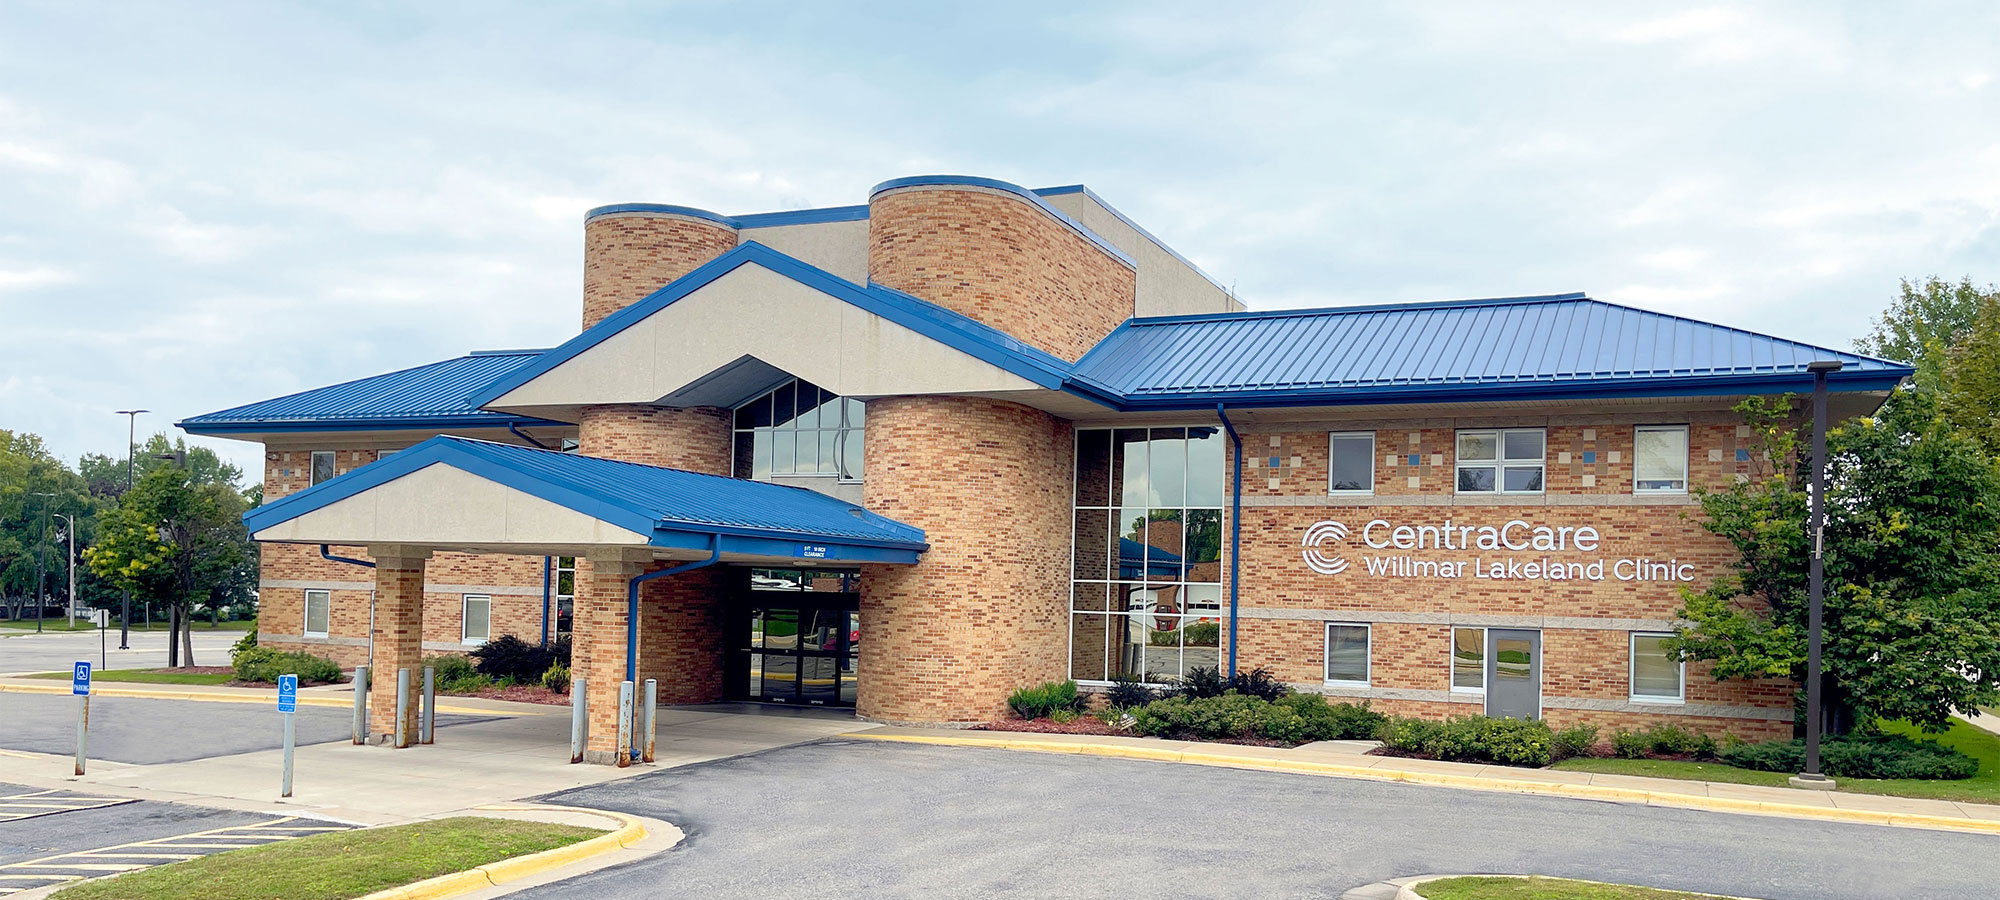 CentraCare - Willmar Lakeland Clinic's Office